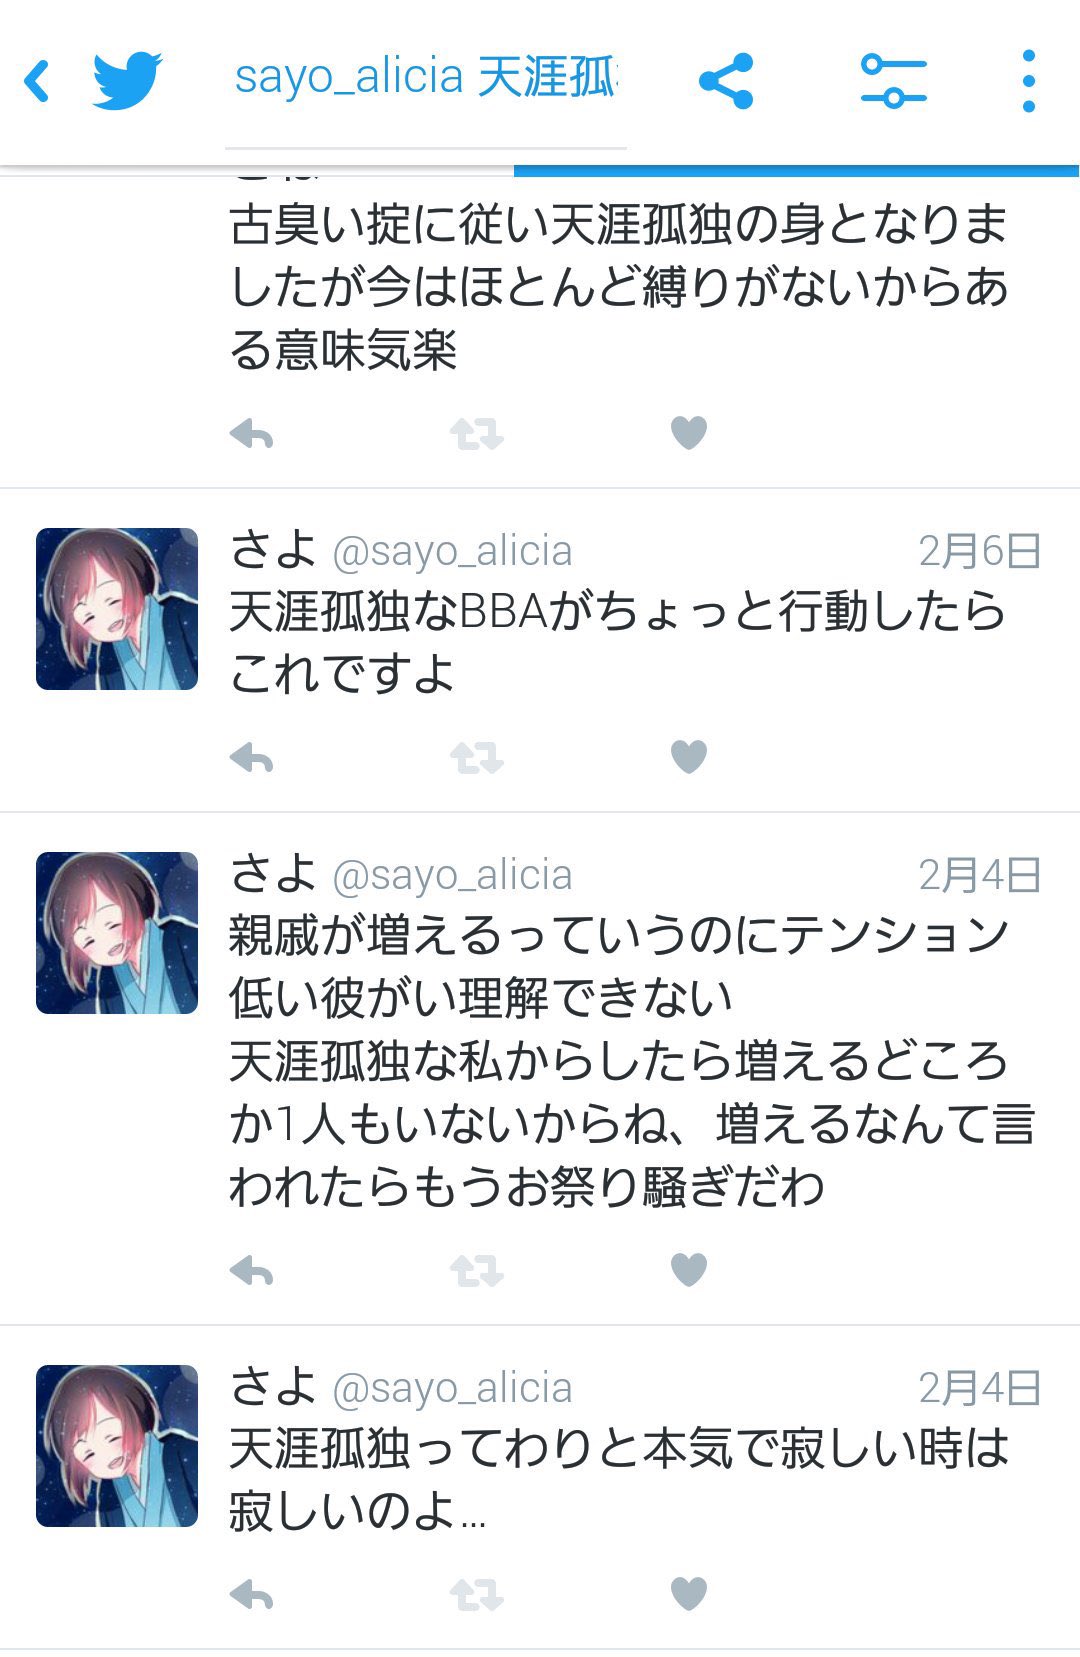 Yui Ebi Umi Twitter